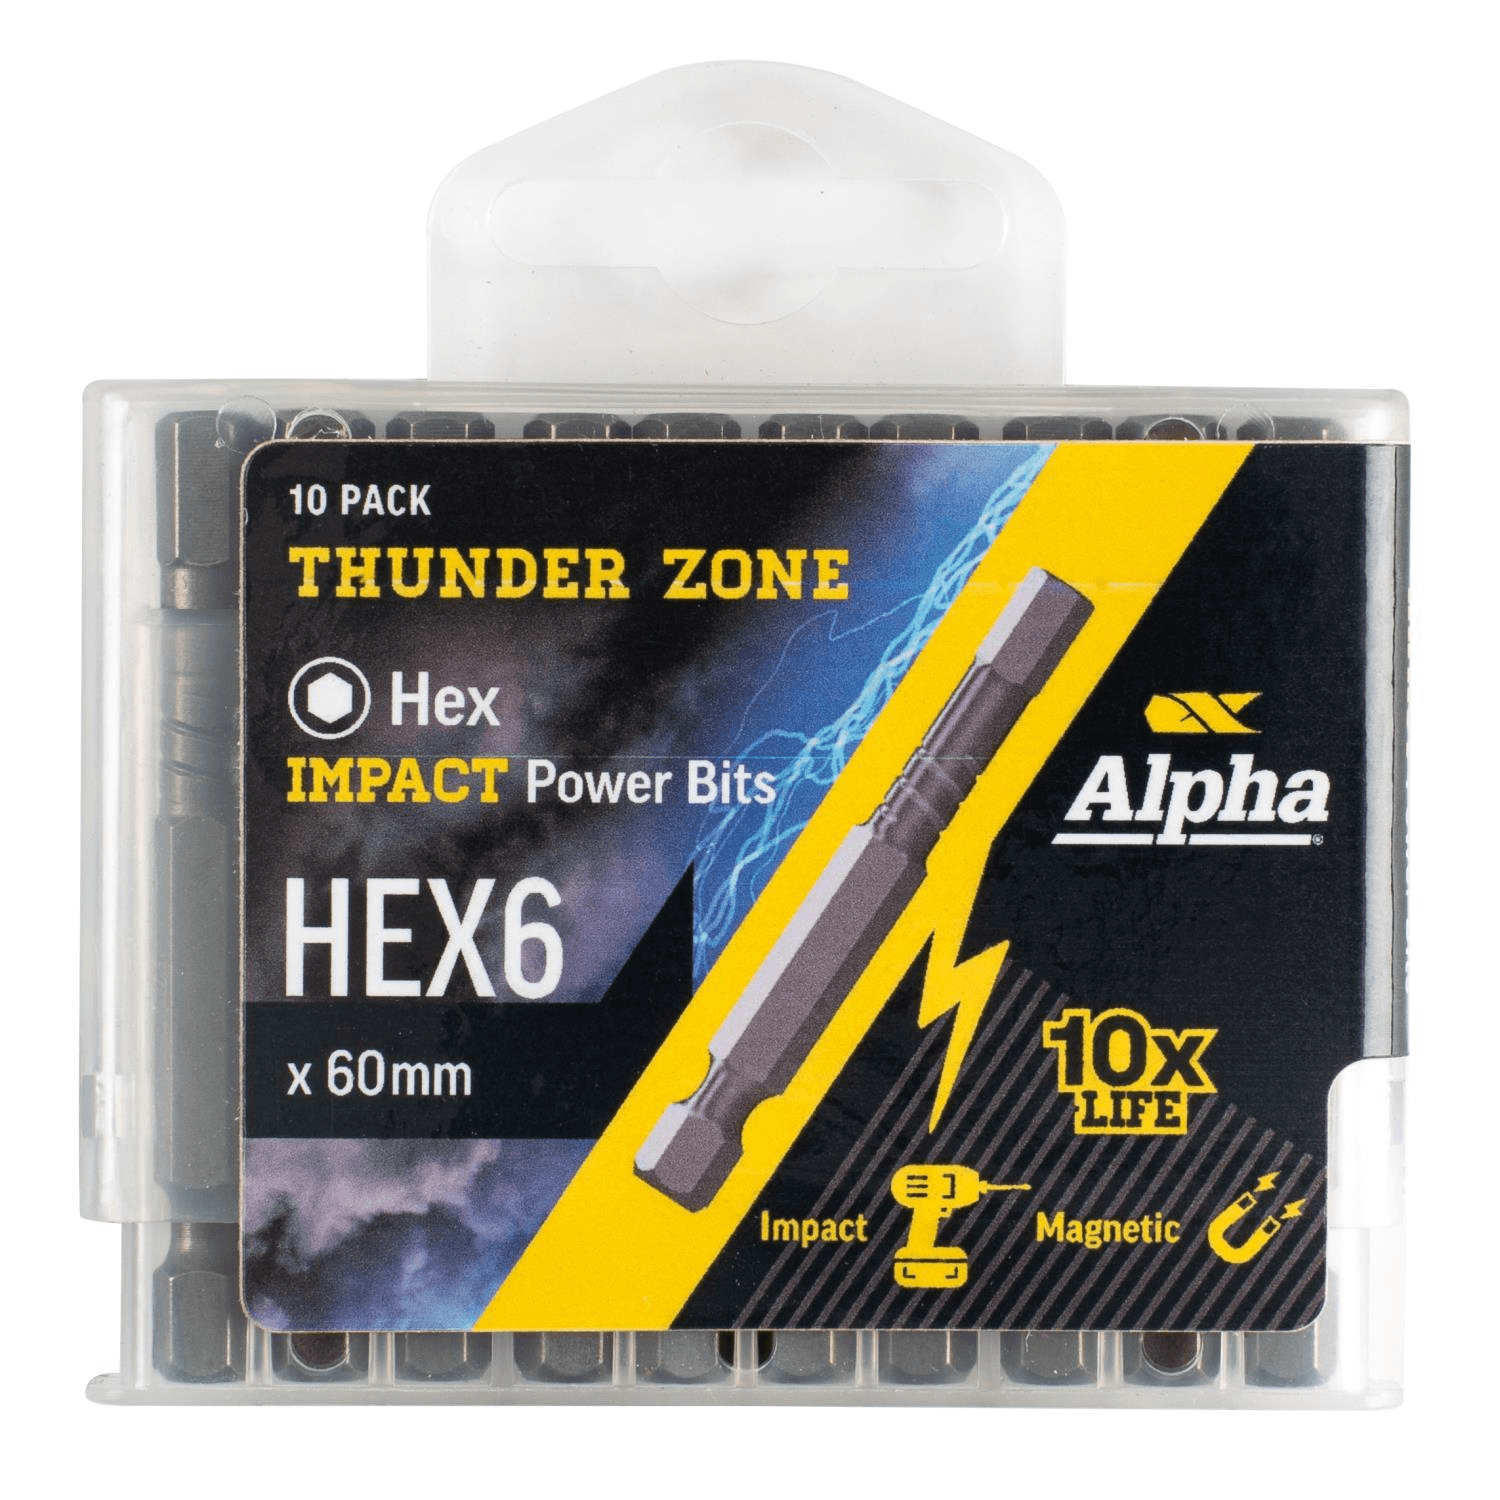 Hex 6 x 60mm Hex Drive Thunderzone Impact Driver Bit - 10 Pack